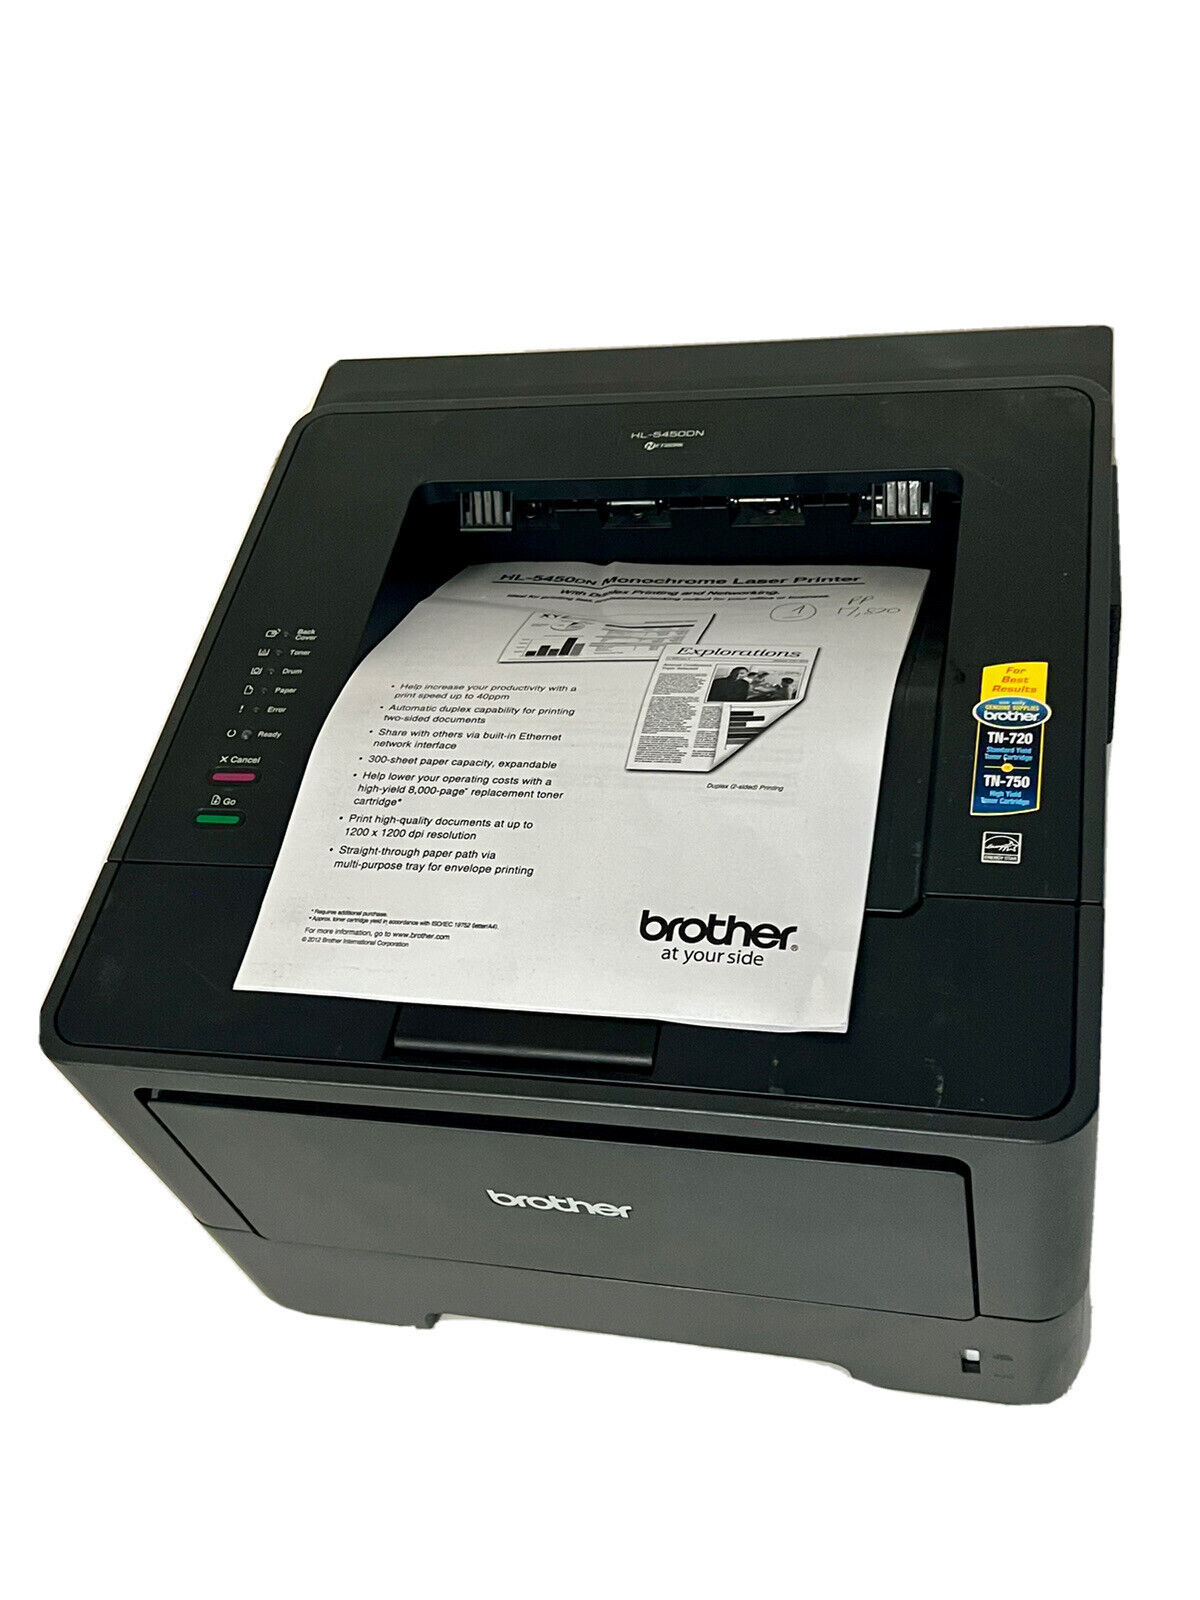 Brother HL-5450DN Monochrome Laser Printer w/Duplex, Network 3.25k Page V. GOOD - $161.83 - $222.52